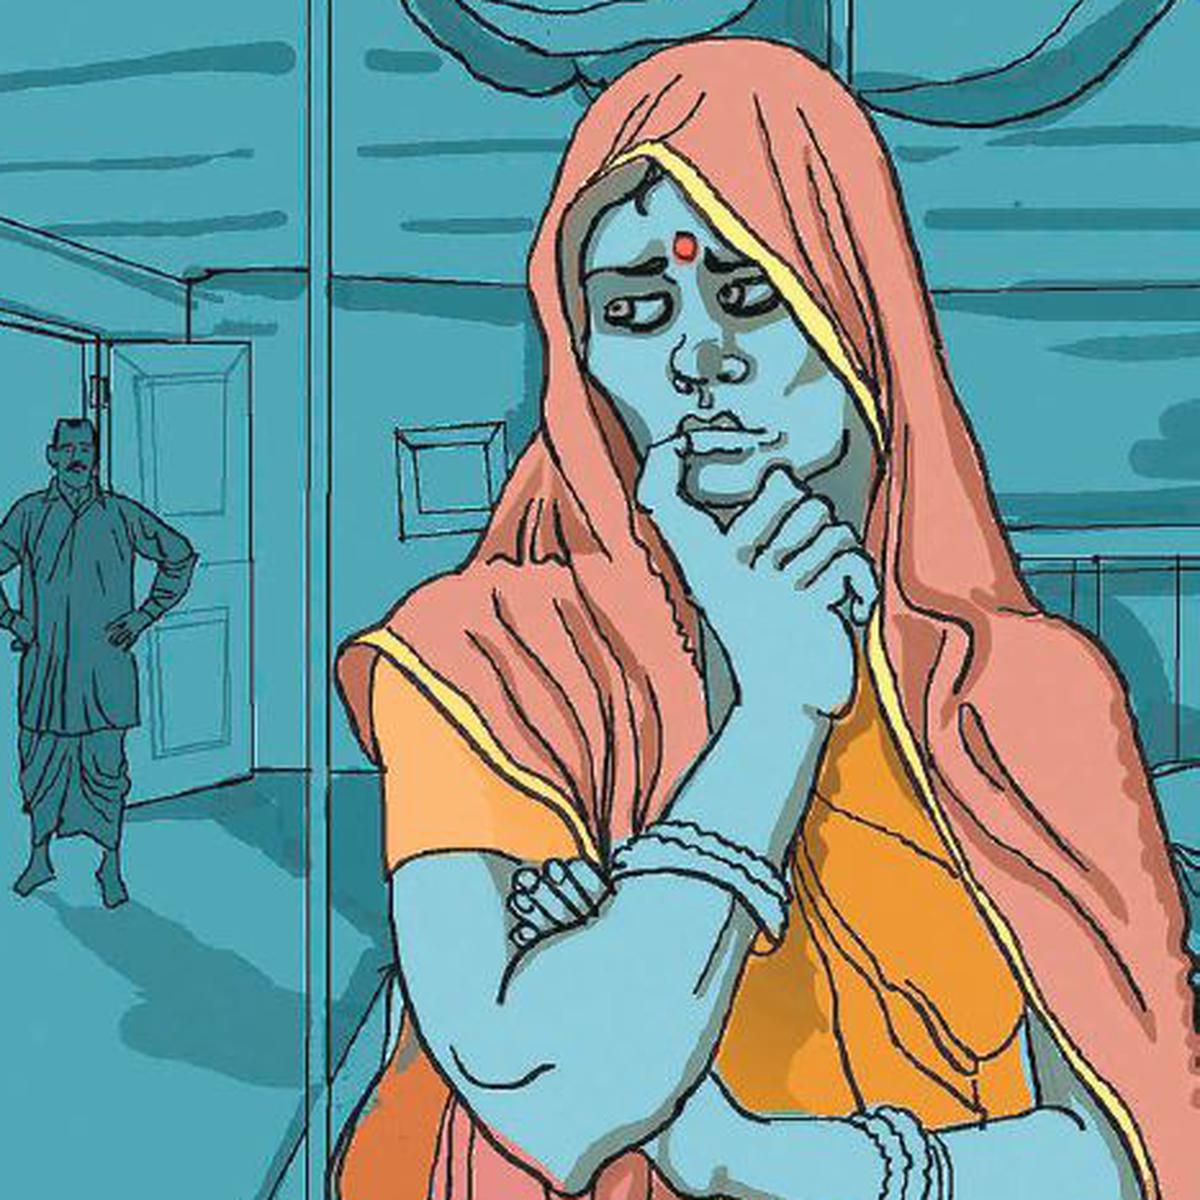 Sex Vaishi Darinda - Sexual assault of wife can take form of rape: Supreme Court - The Hindu